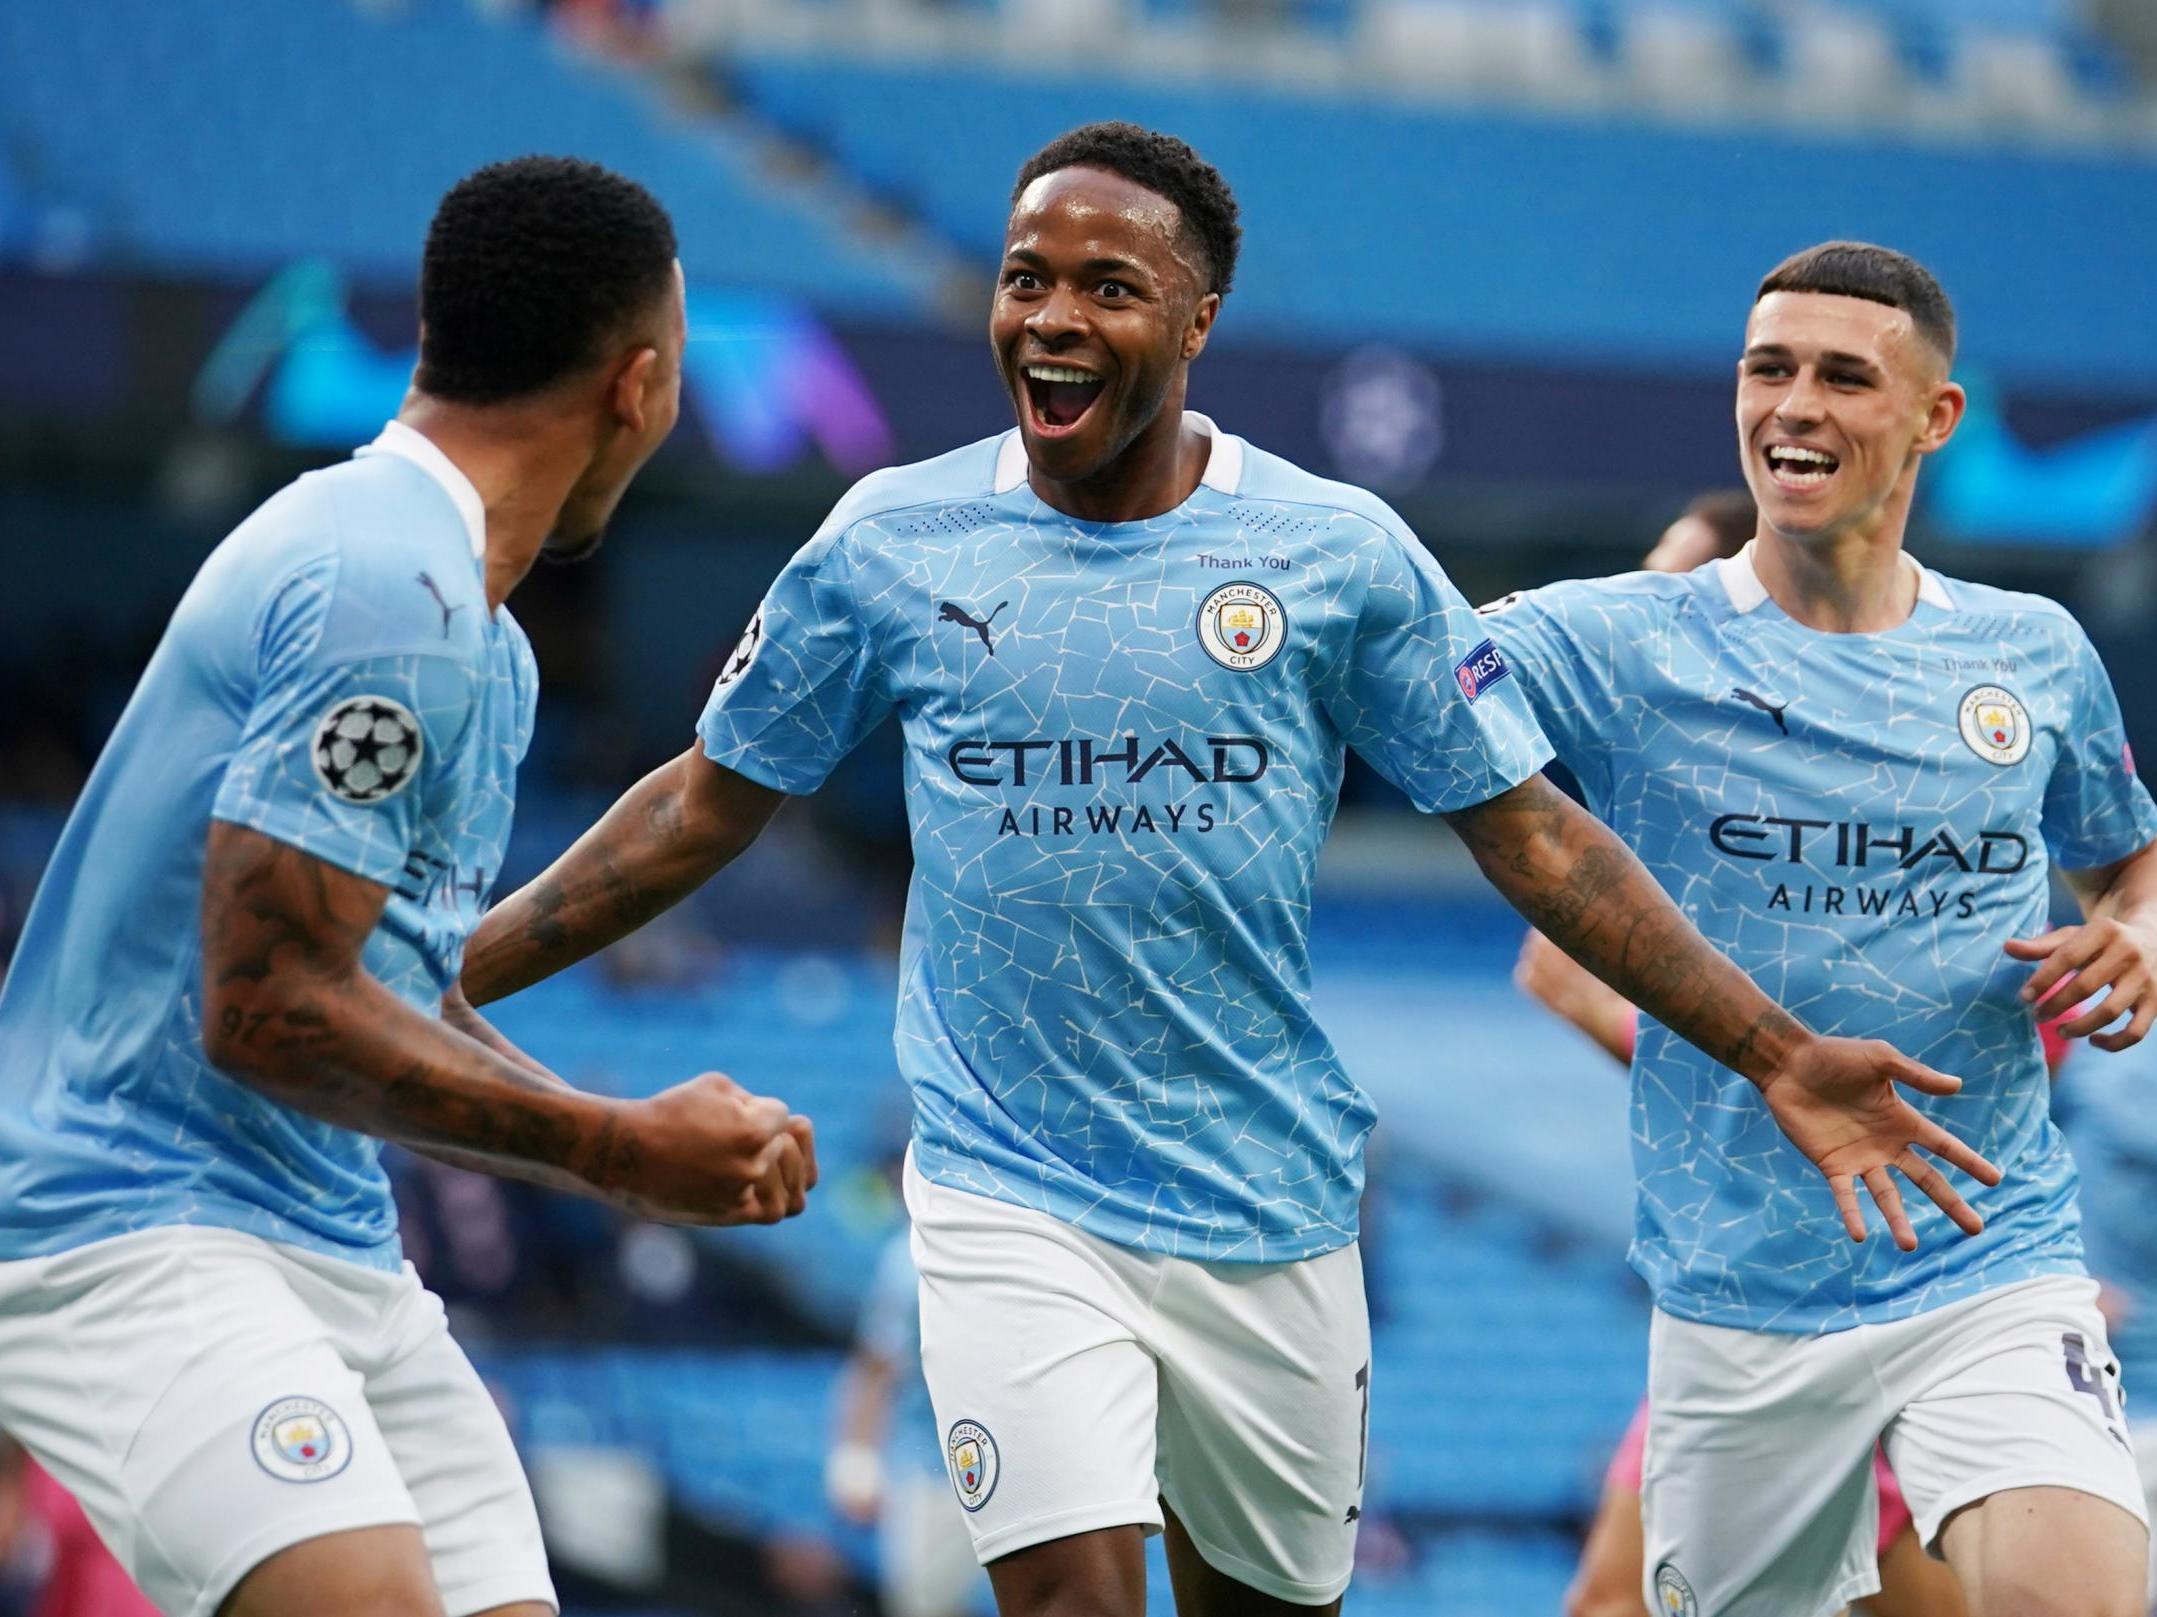 Manchester City's Raheem Sterling celebrates scoring